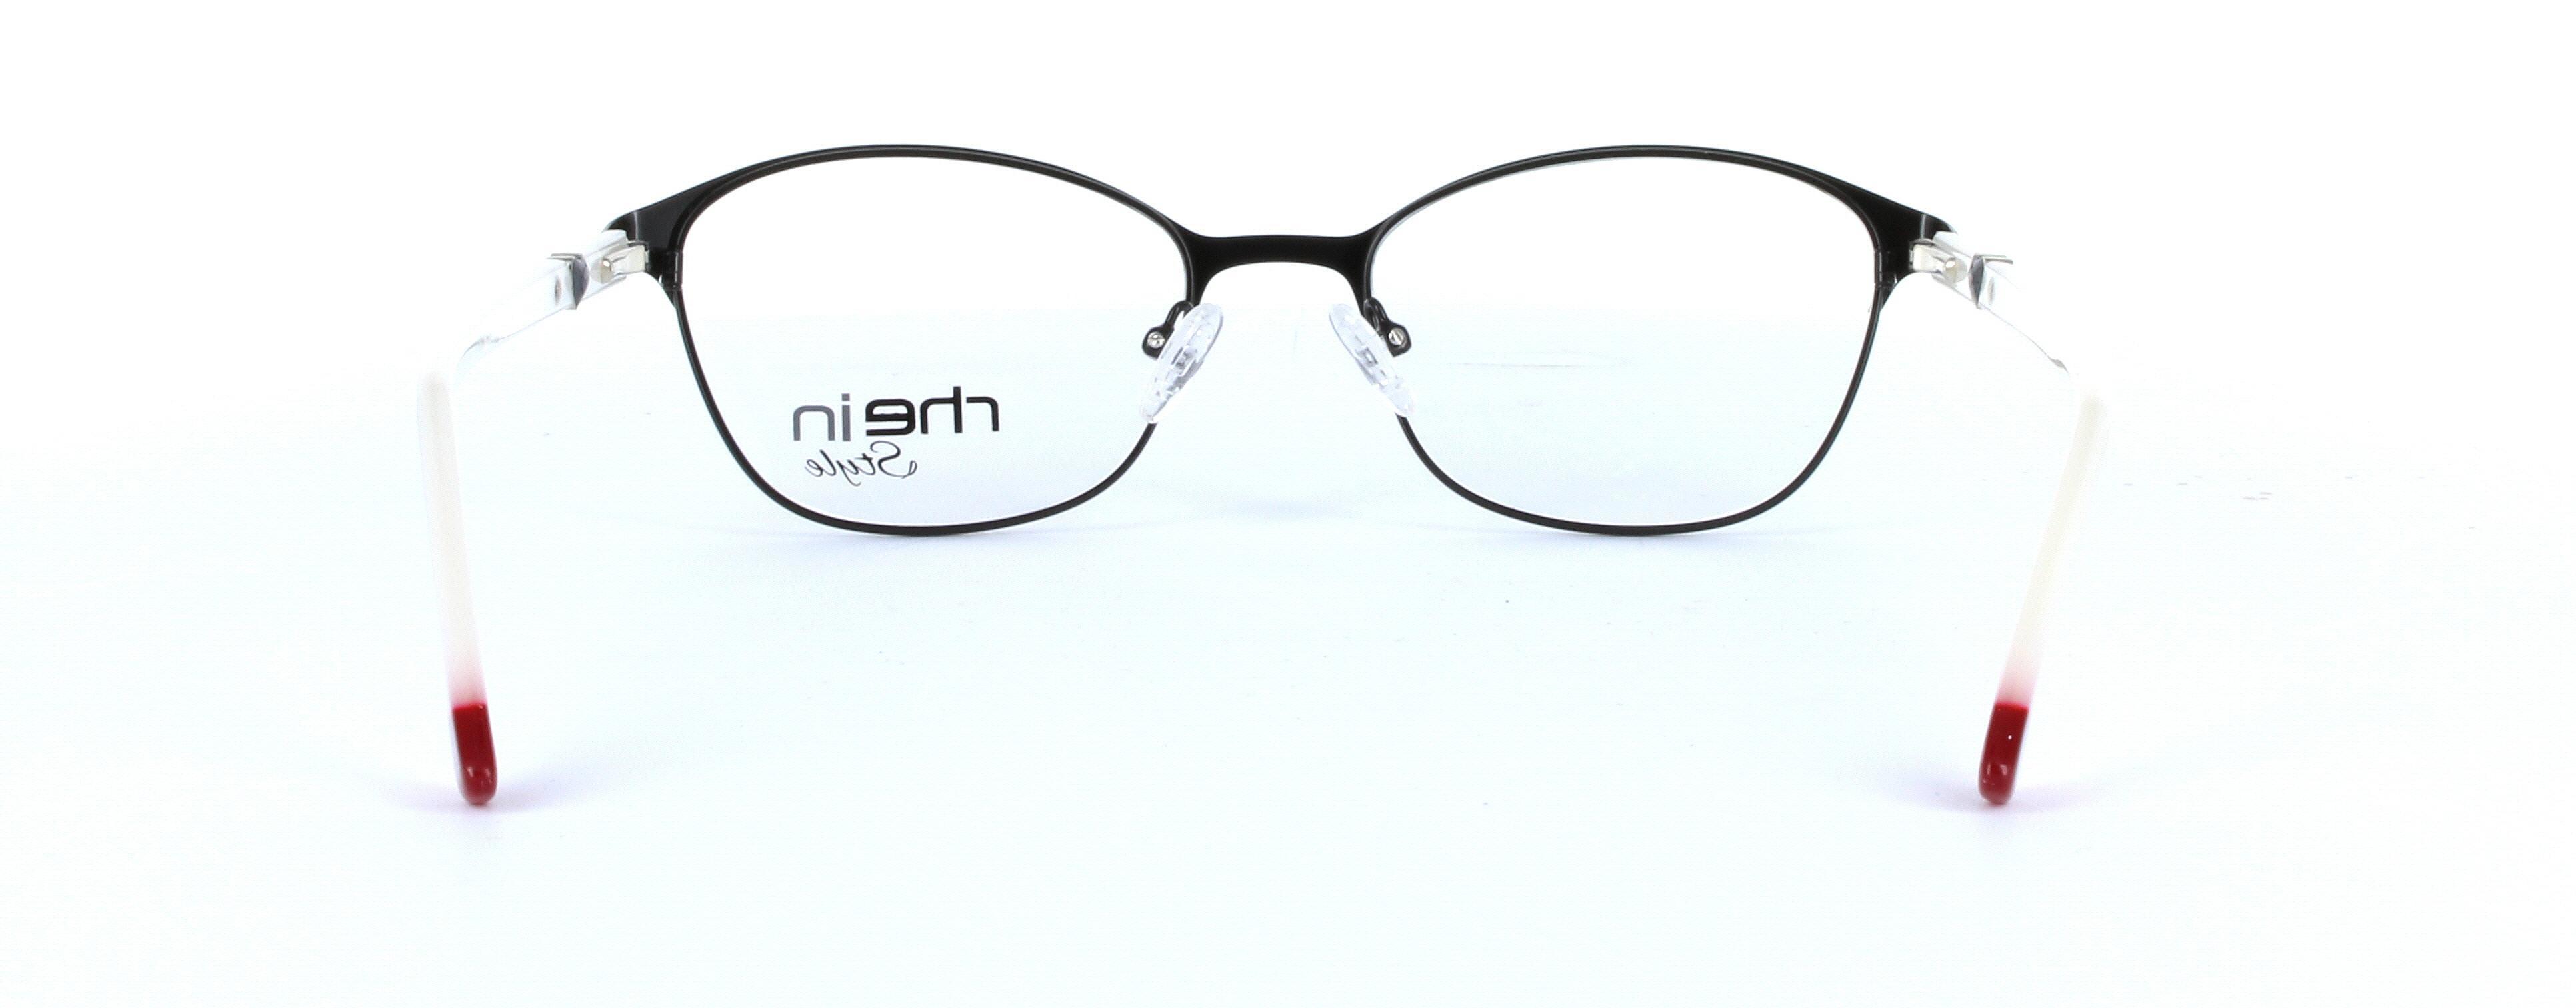 Omma Black Full Rim Oval Round Metal Glasses  - Image View 3